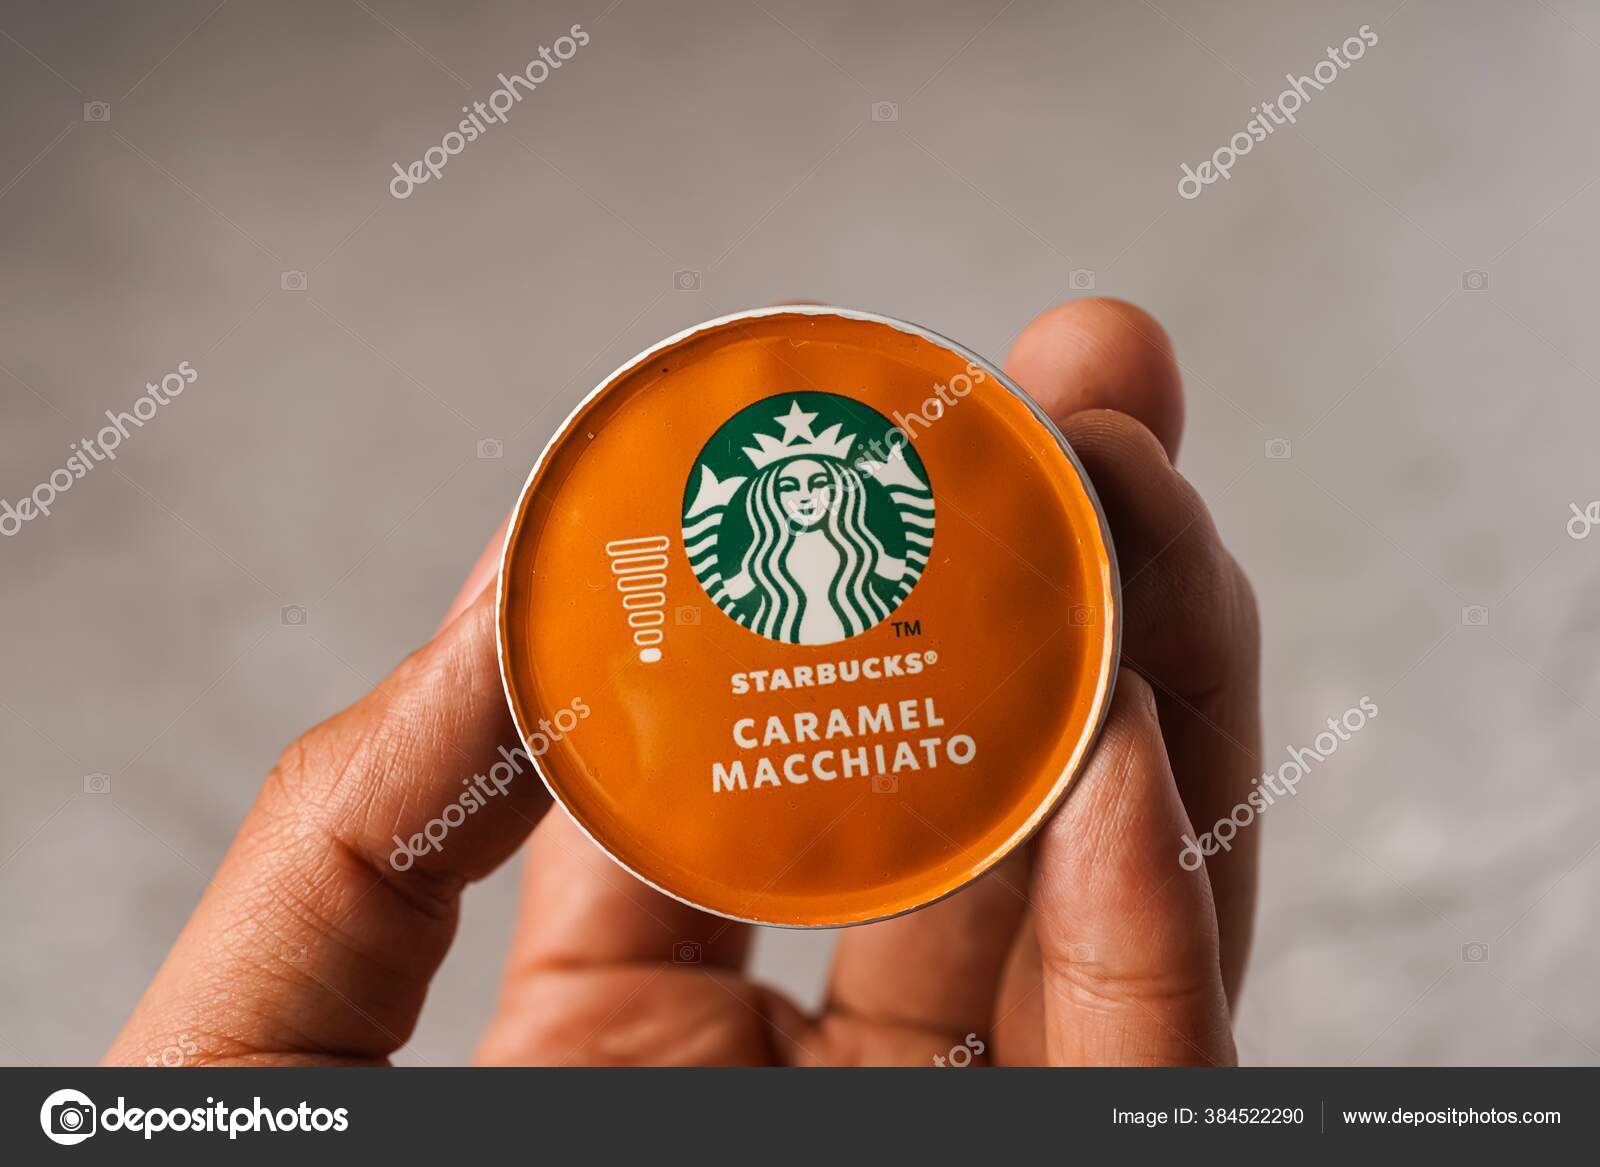 Illustrative Editorial Shot Starbucks Caramel Macchiato Coffee Capsules –  Stock Editorial Photo © fadhli.adnan19@gmail.com #384522290